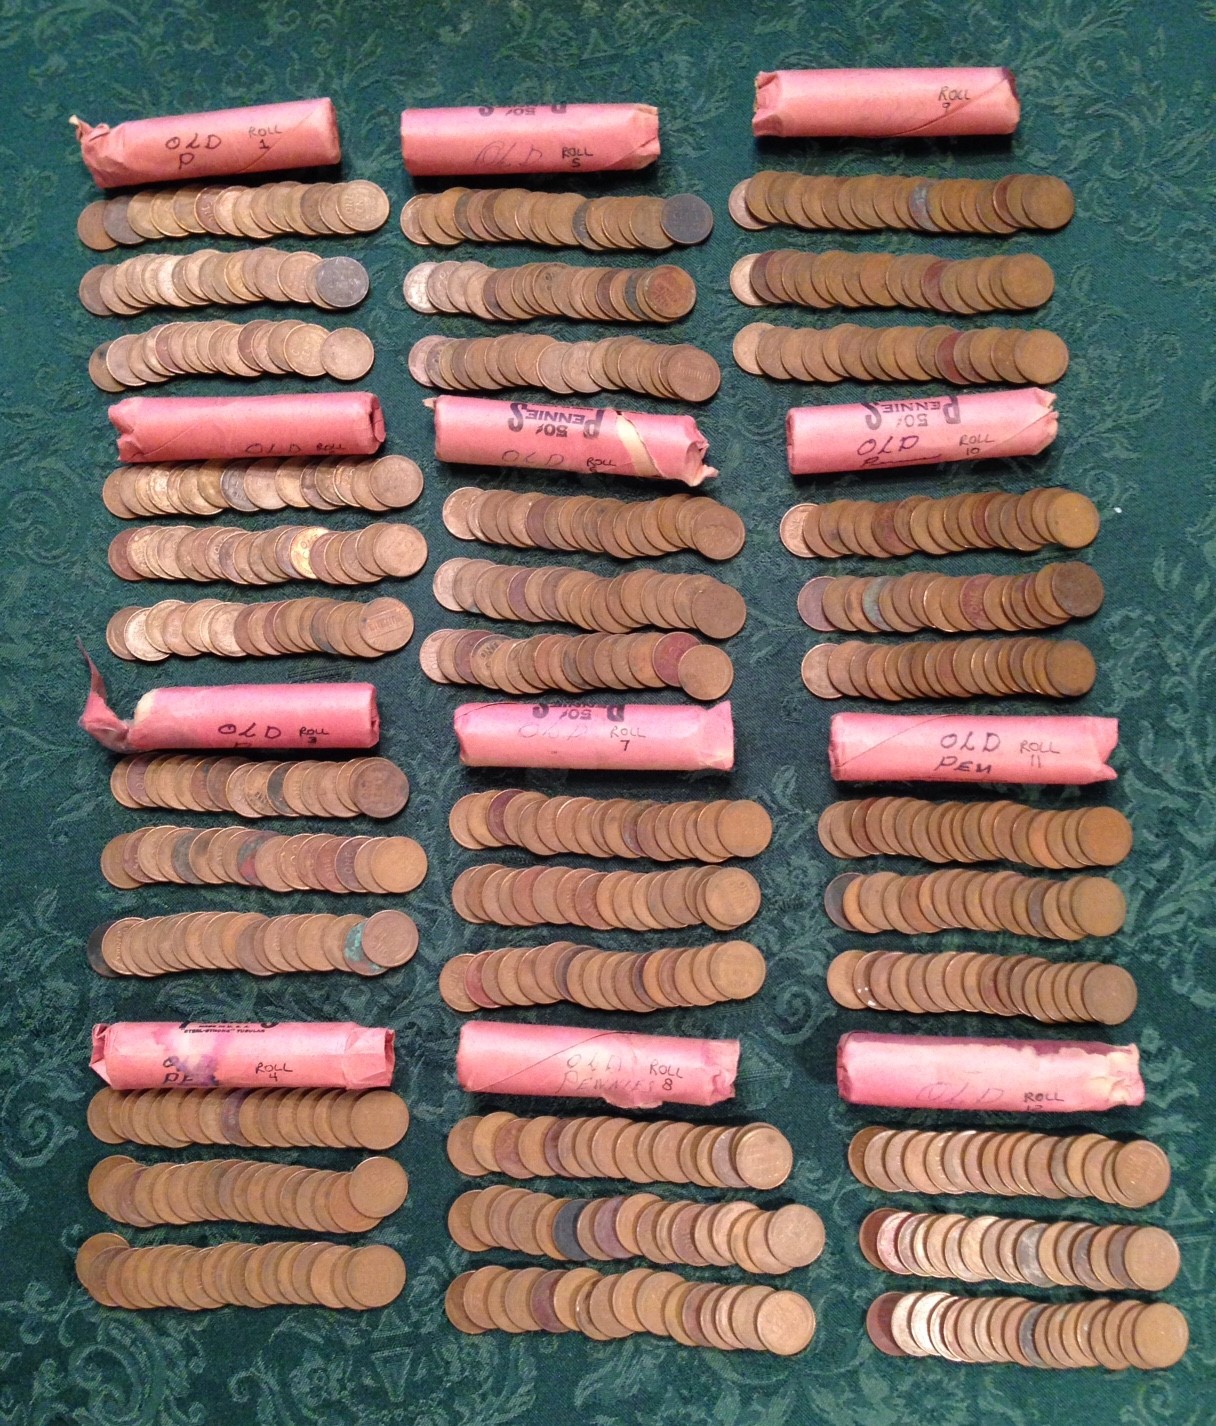 12 Old Penny Rolls.jpg